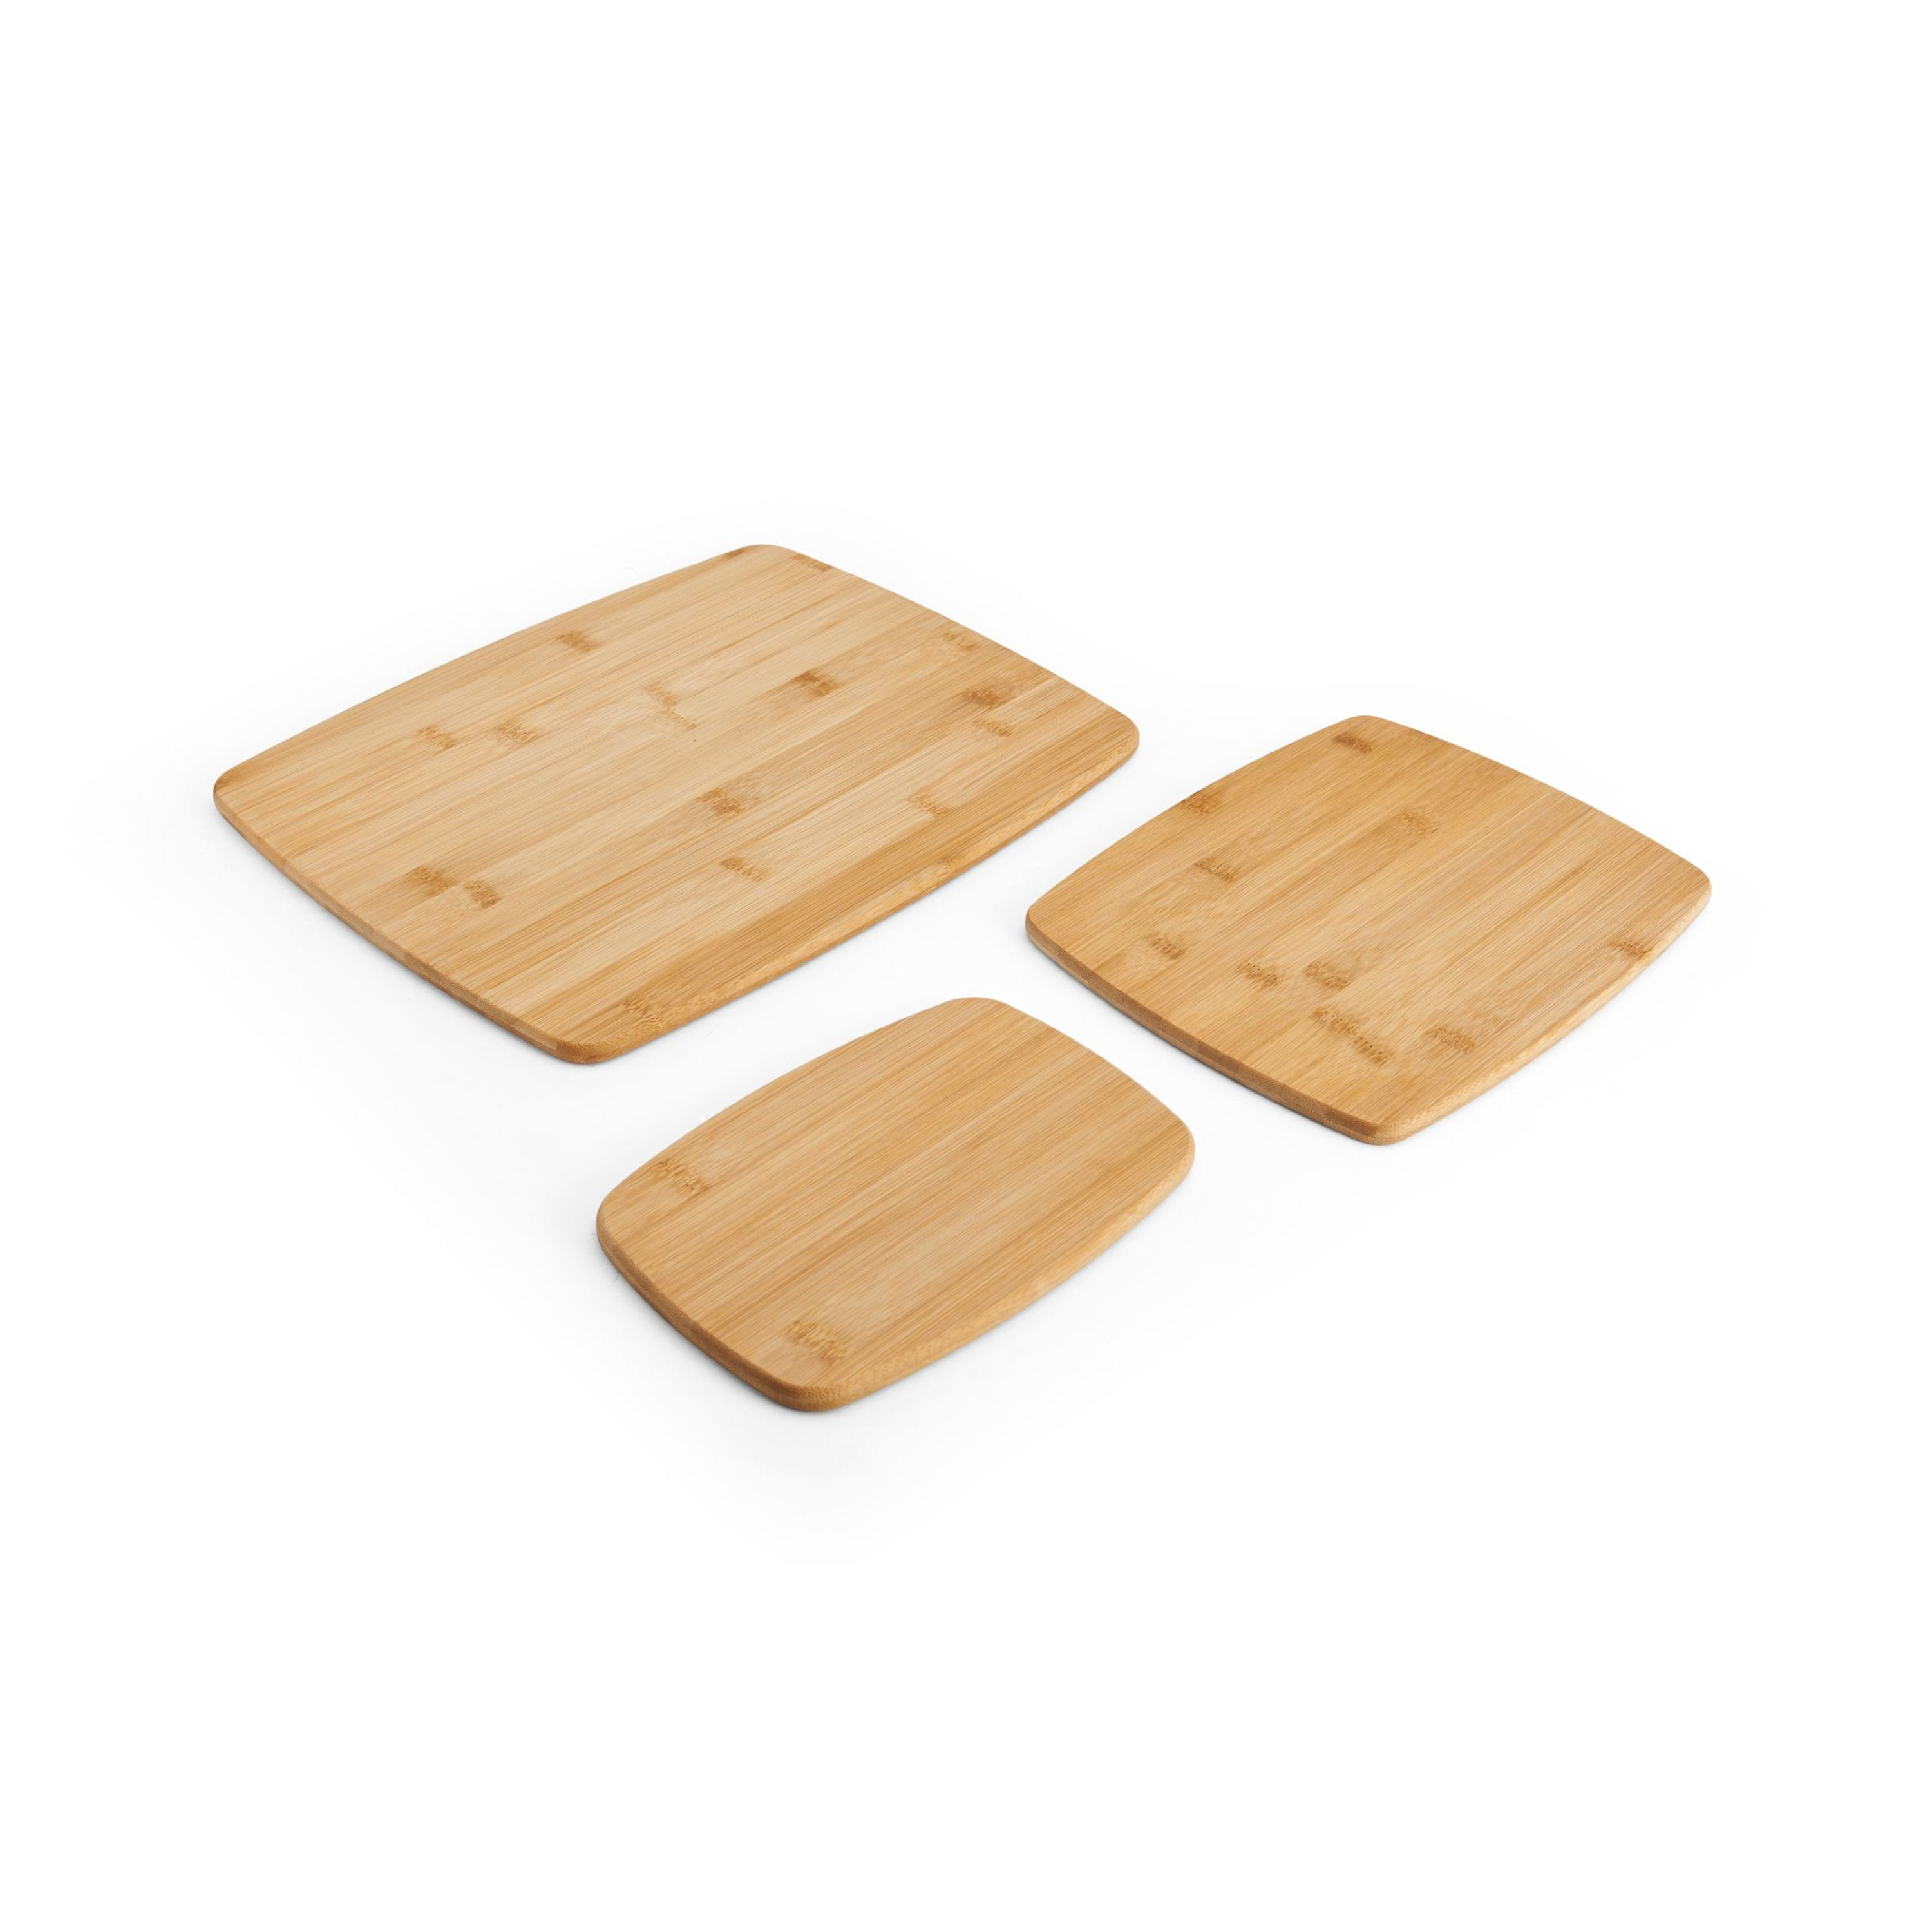 Wheat Straw 3 Piece Reversible Cutting Board Set - World Market